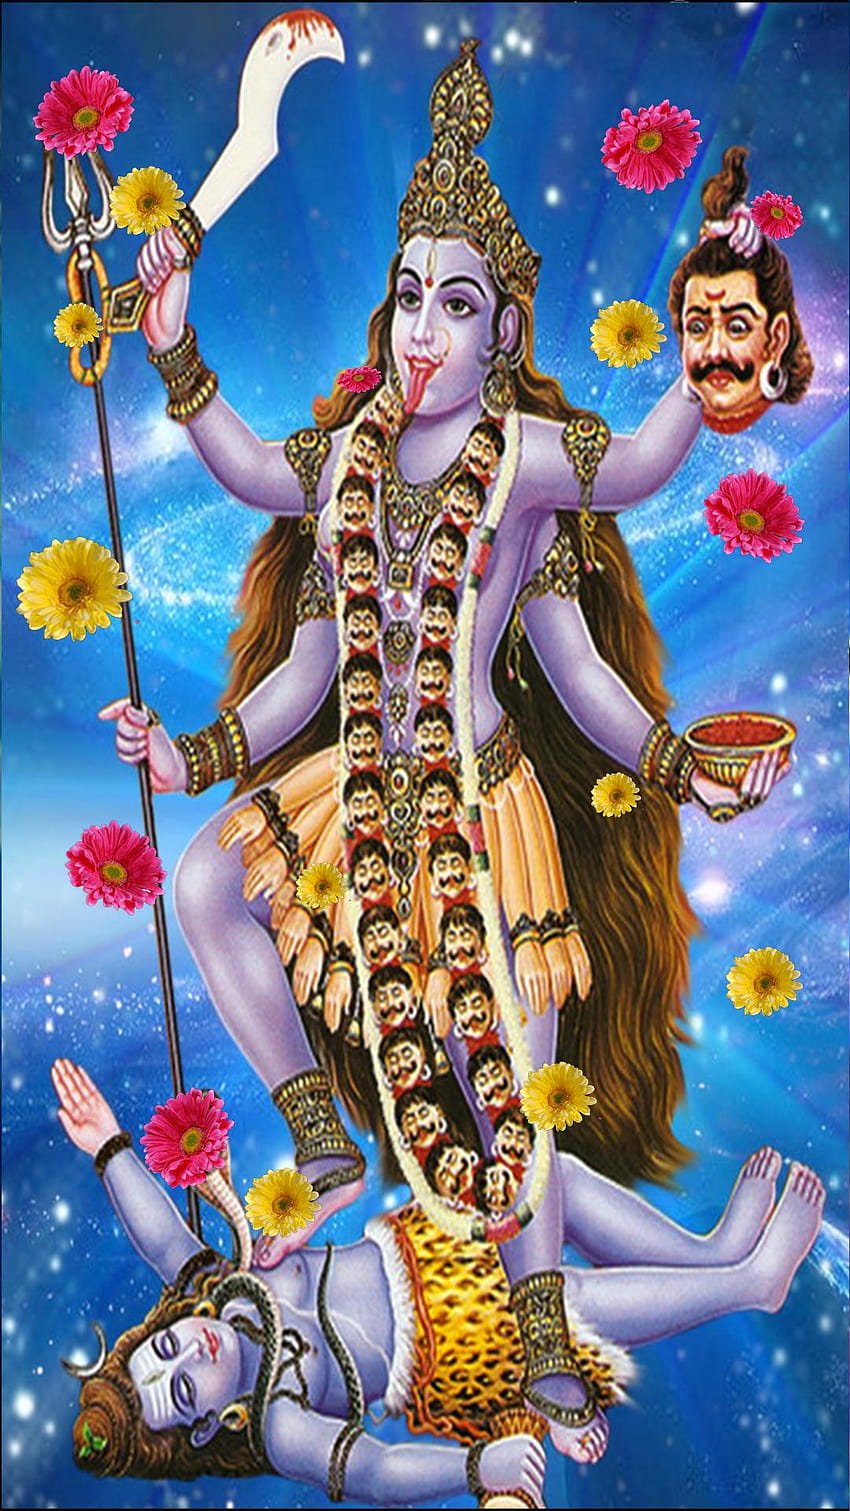 FREE Download Maa Kali Wallpapers